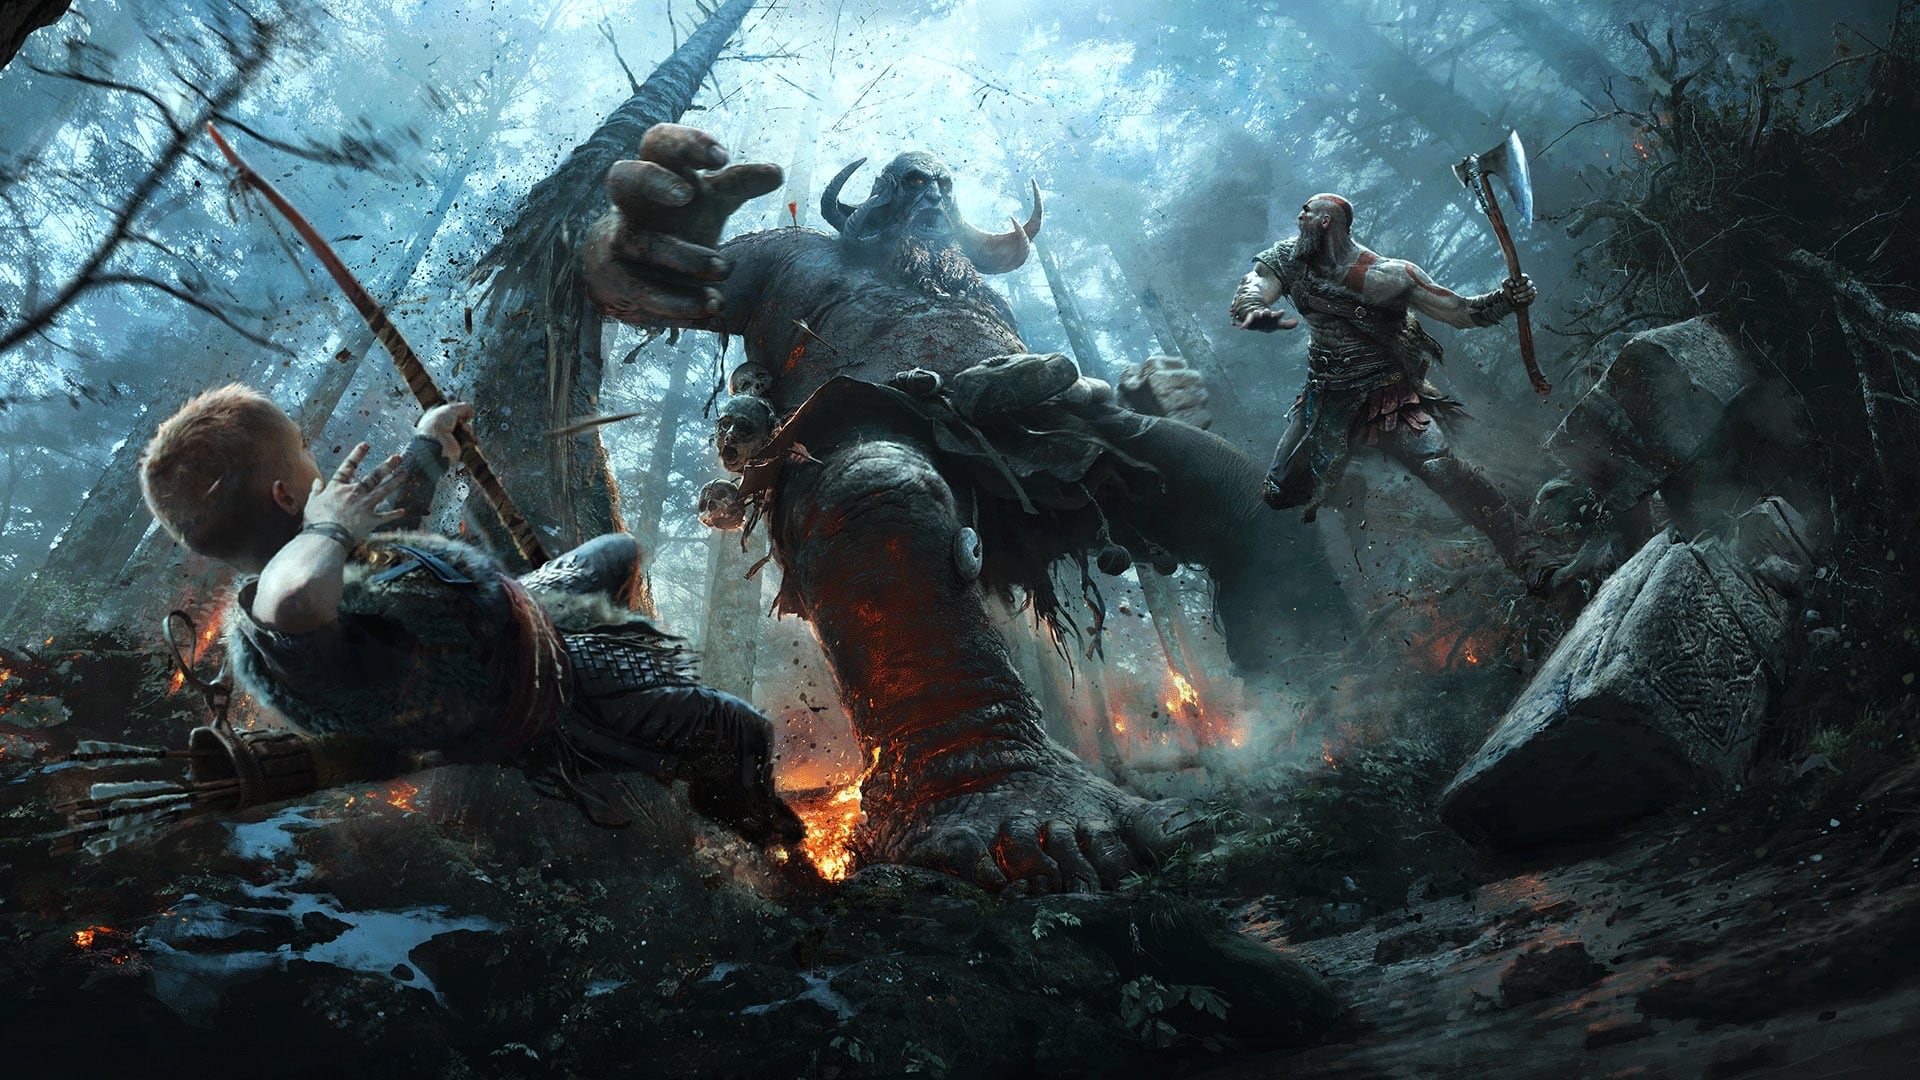 2018's God of War reportedly surpasses 25 million copies sold